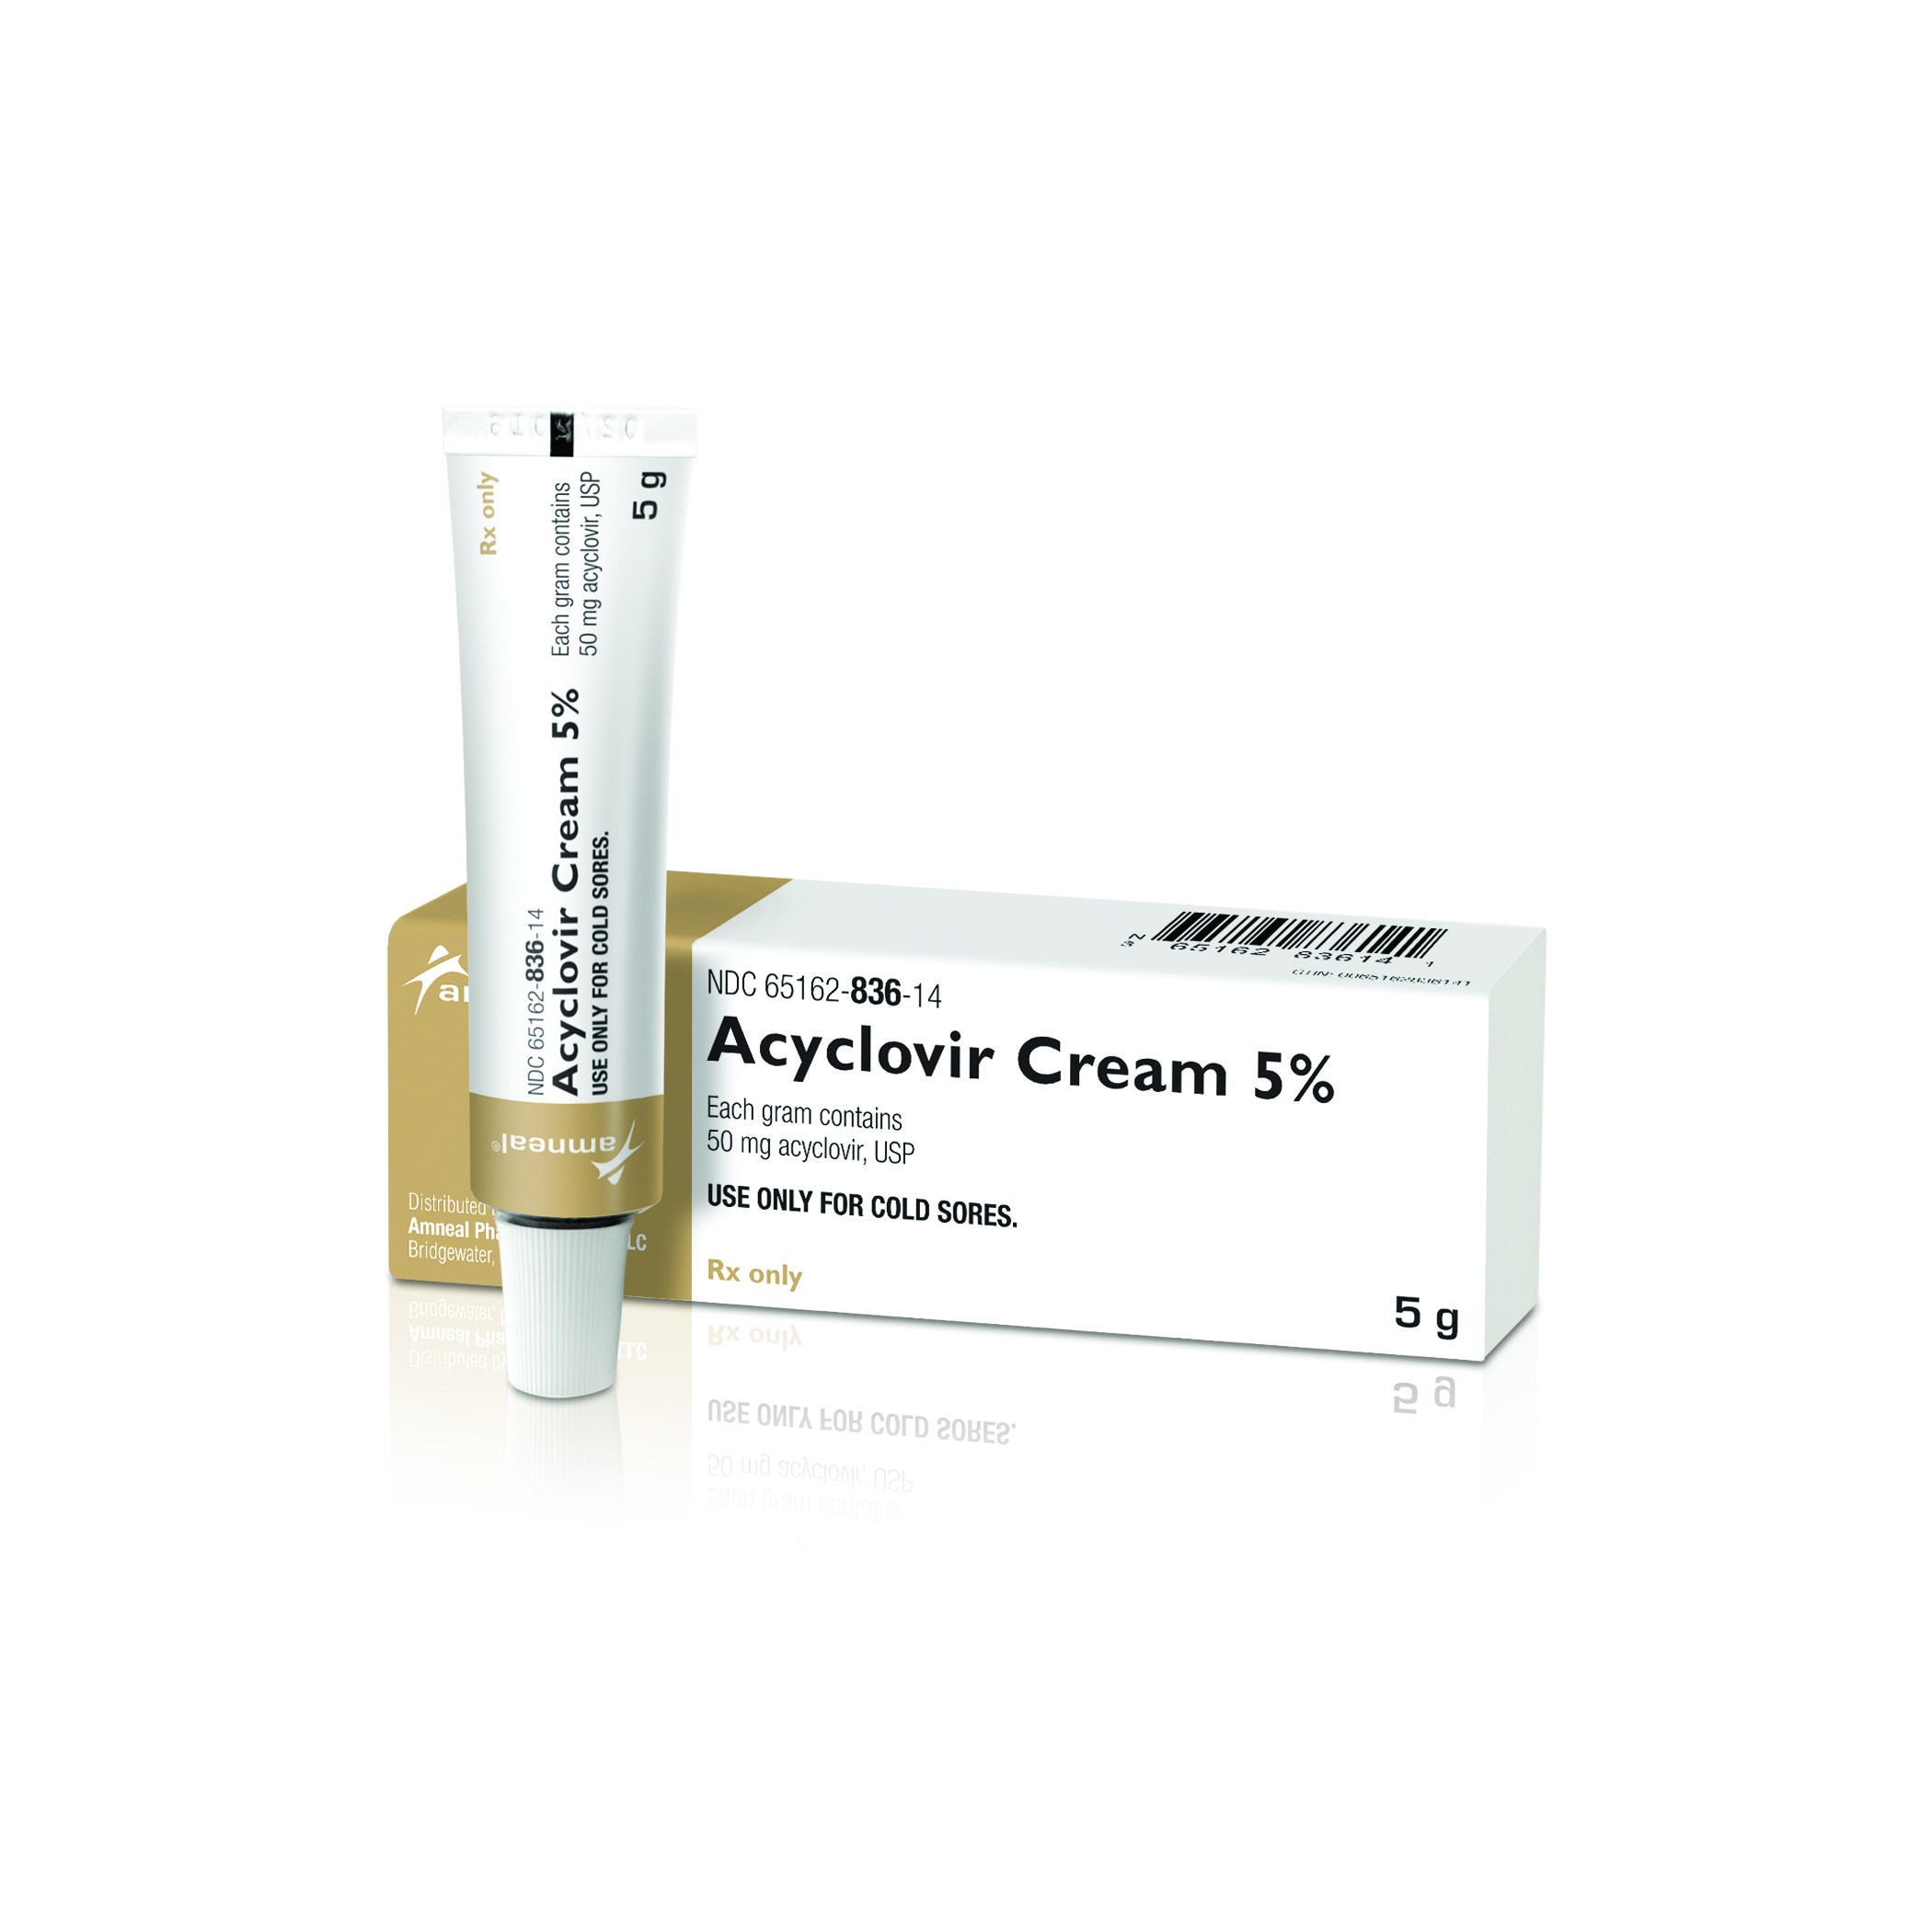 Acyclovir Cream - 5g Carton-Family-CMYK.jpg